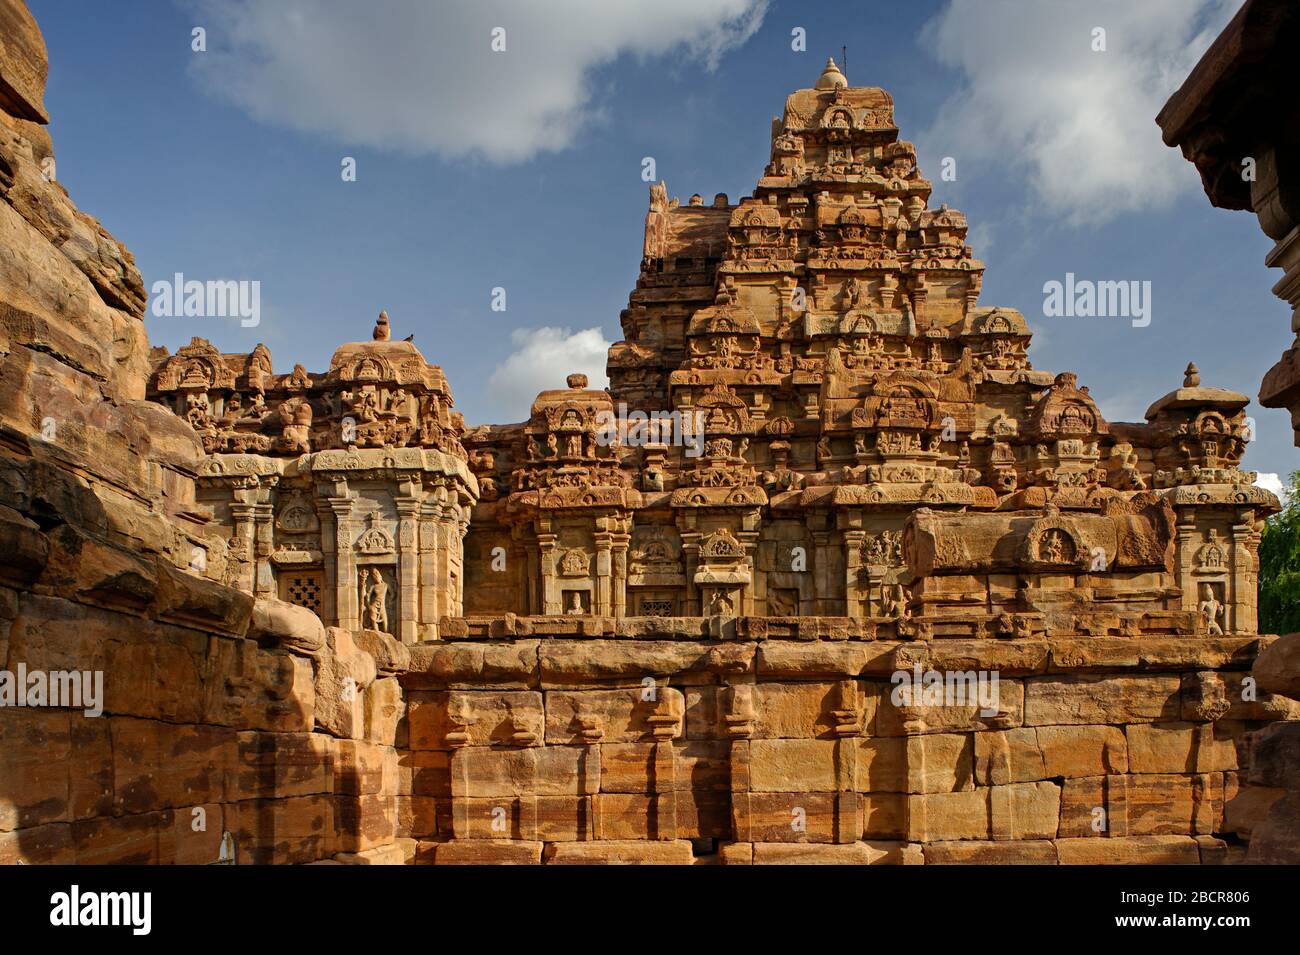 06 Jun 2008 Pattadakal, also called Paṭṭadakallu or Raktapura, is a complex of 7th and 8th century CE Hindu and Jain temples Complex Bagalkot district Stock Photo